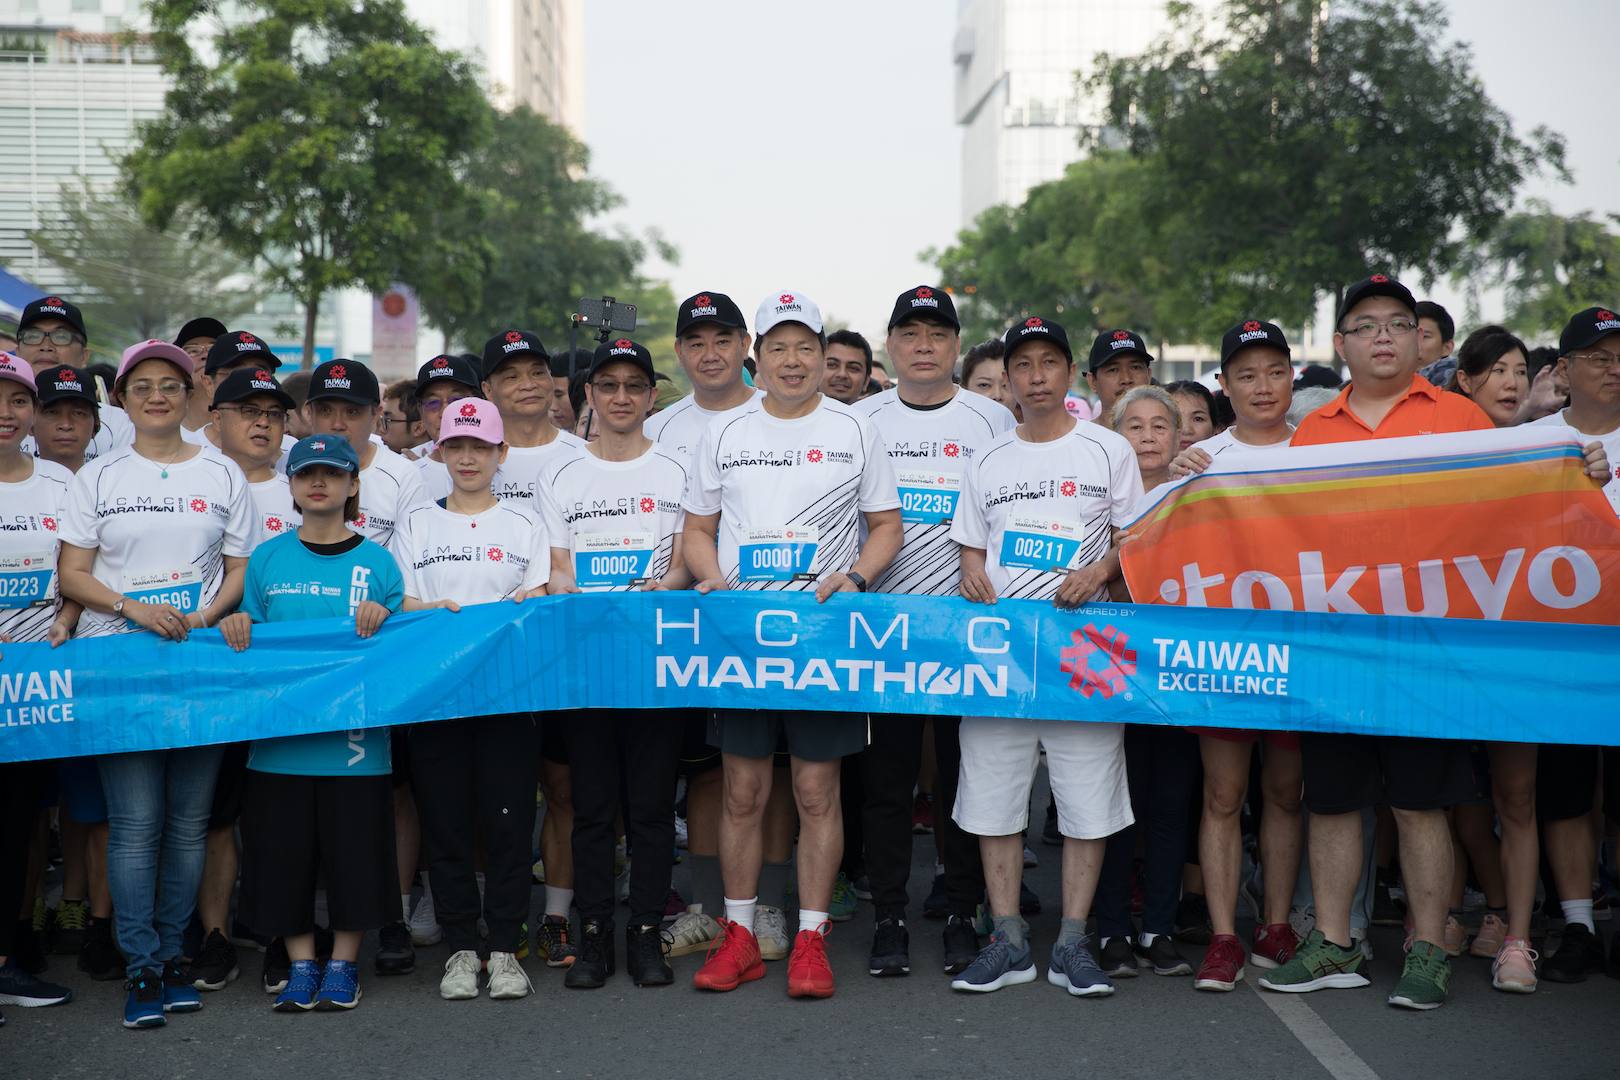 Taiwan-Excellence-2019-HCM-Marathon-01.jpg